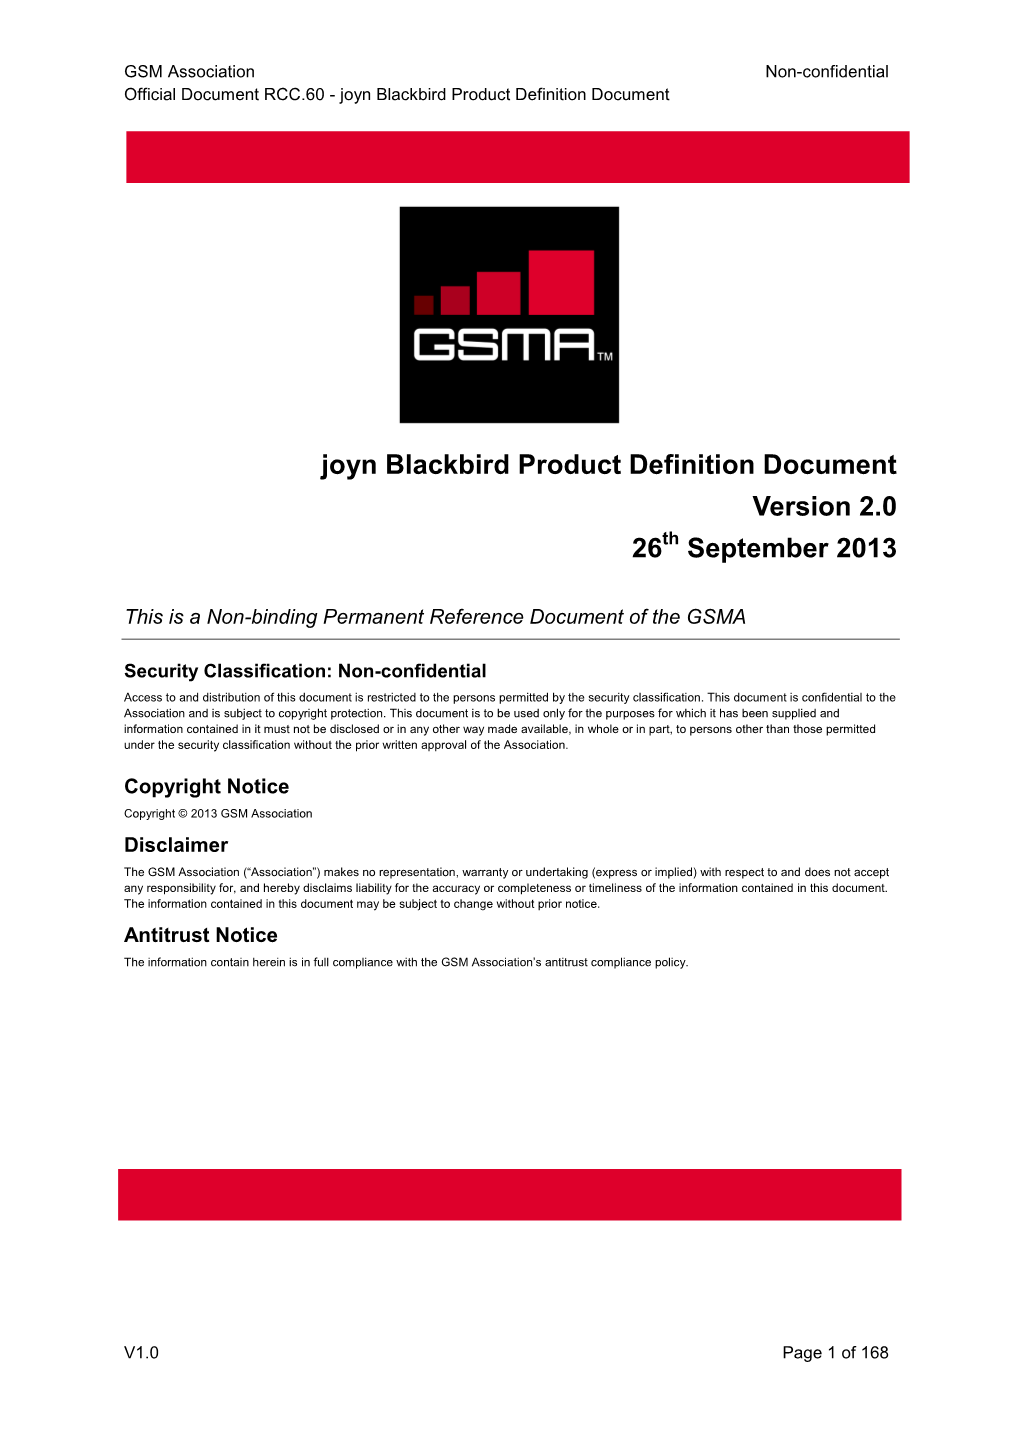 Joyn Blackbird Product Definition Document Version 2.0 26Th September 2013